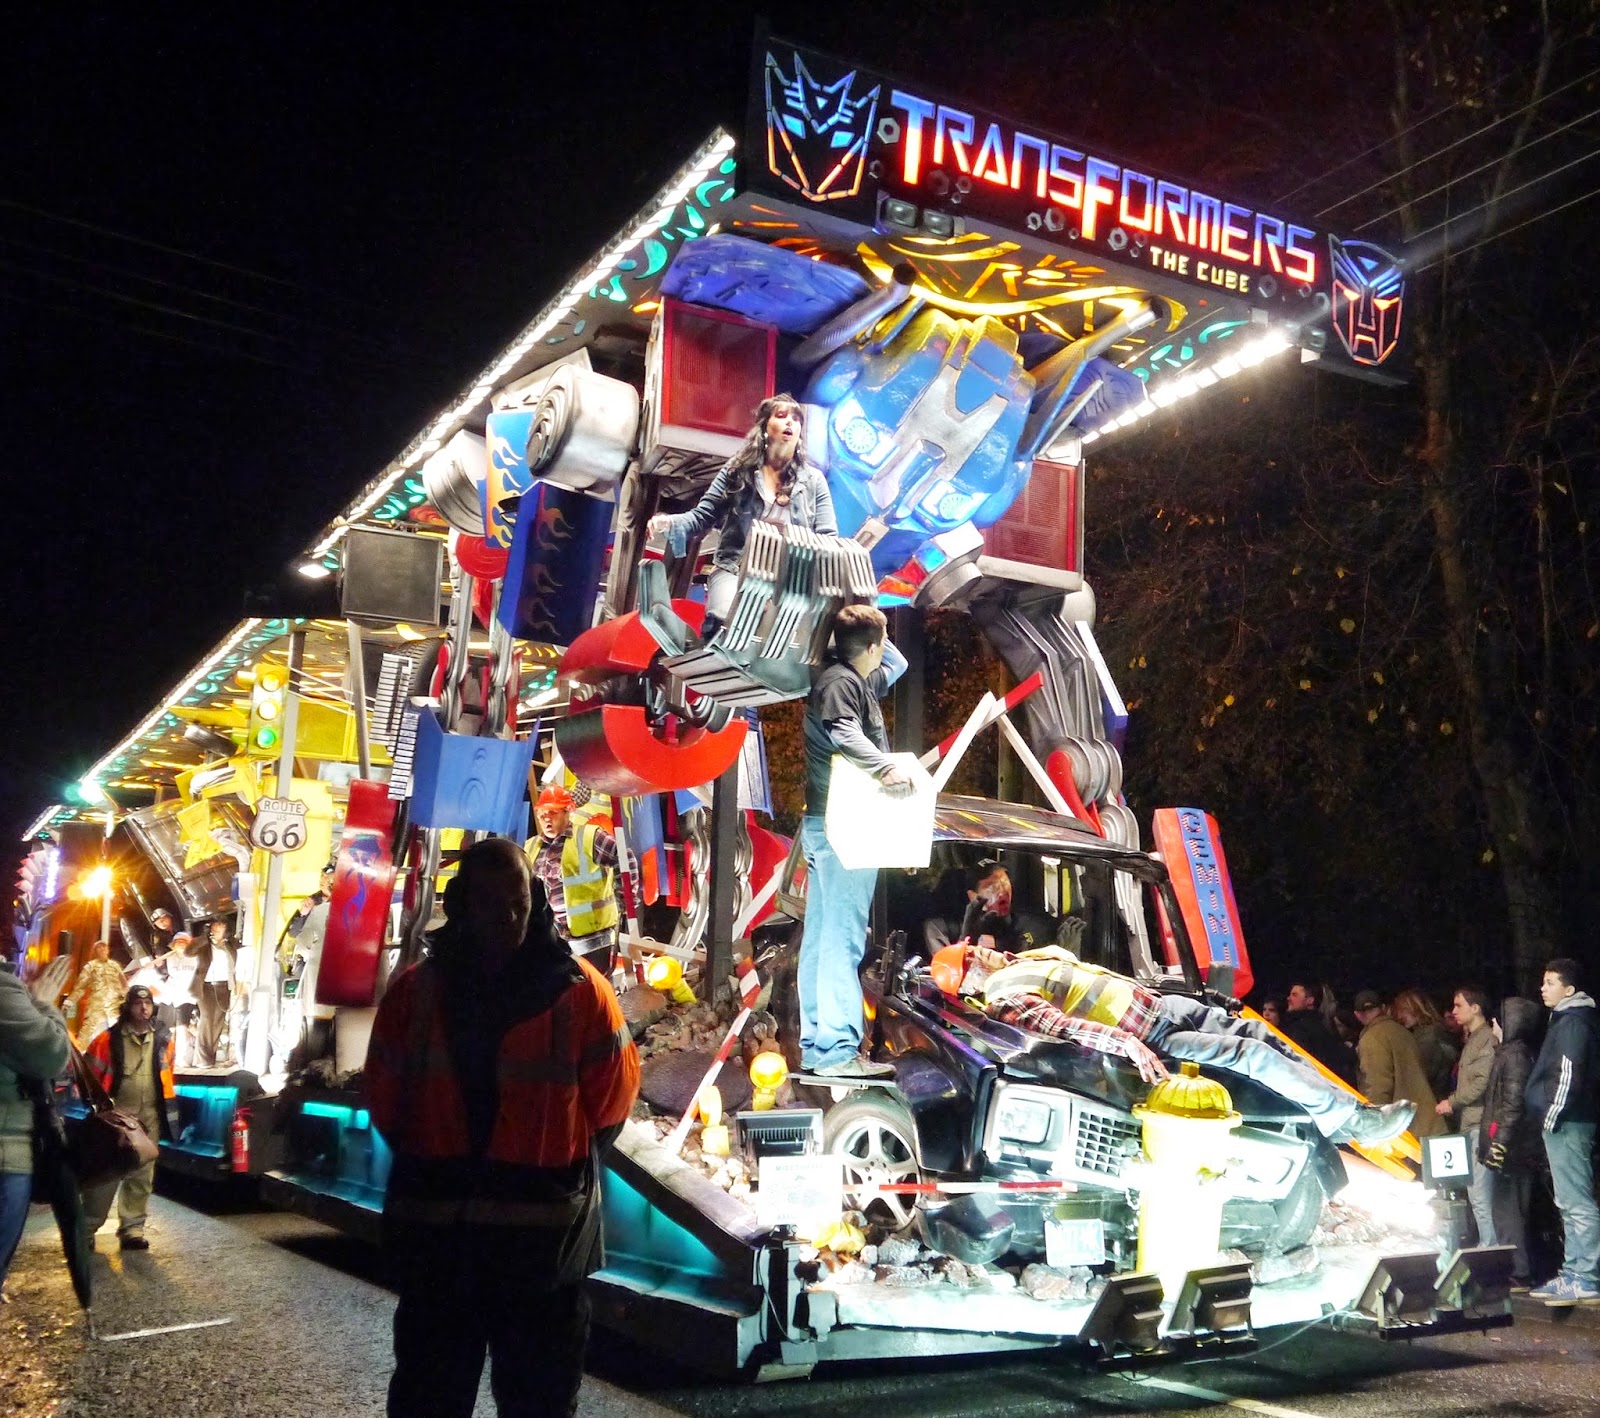 Somerset Carnival Season 2014 - Gemini Carnival Club with 'Transformers: The Cube'